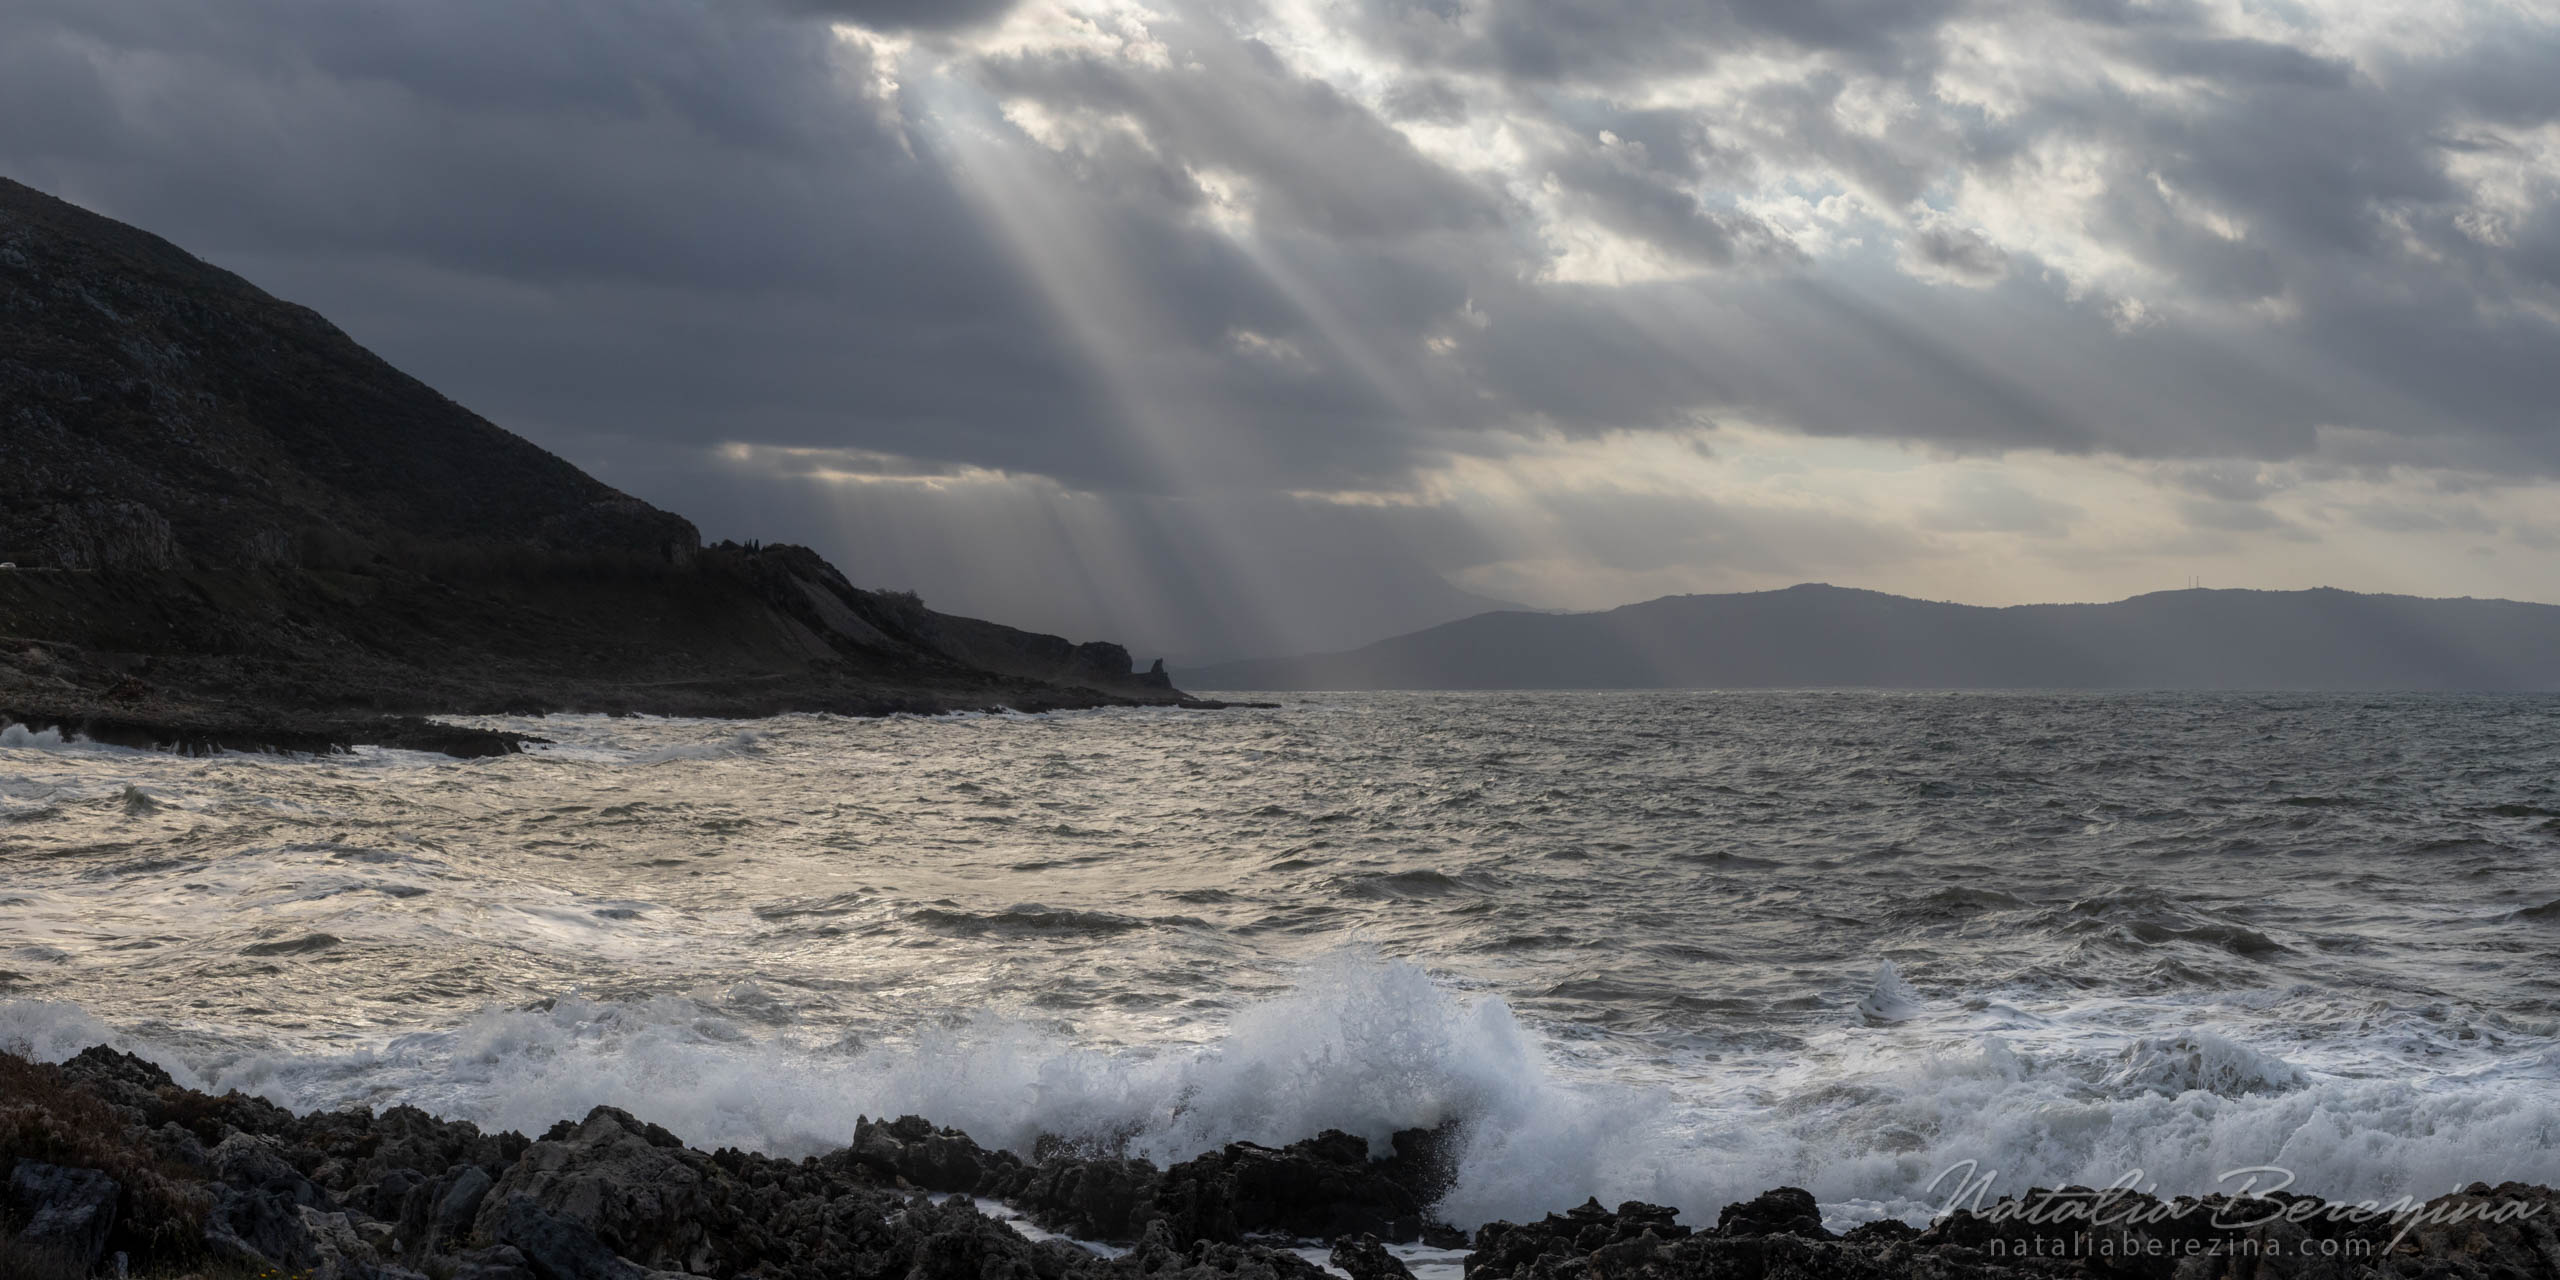 Greece, Crete, landscape, sea, cloud, sunlight, skyline, gold, gray, wave, 2x1 CR1-NB7B6A7162-P - Crete, Greece - Natalia Berezina Photography